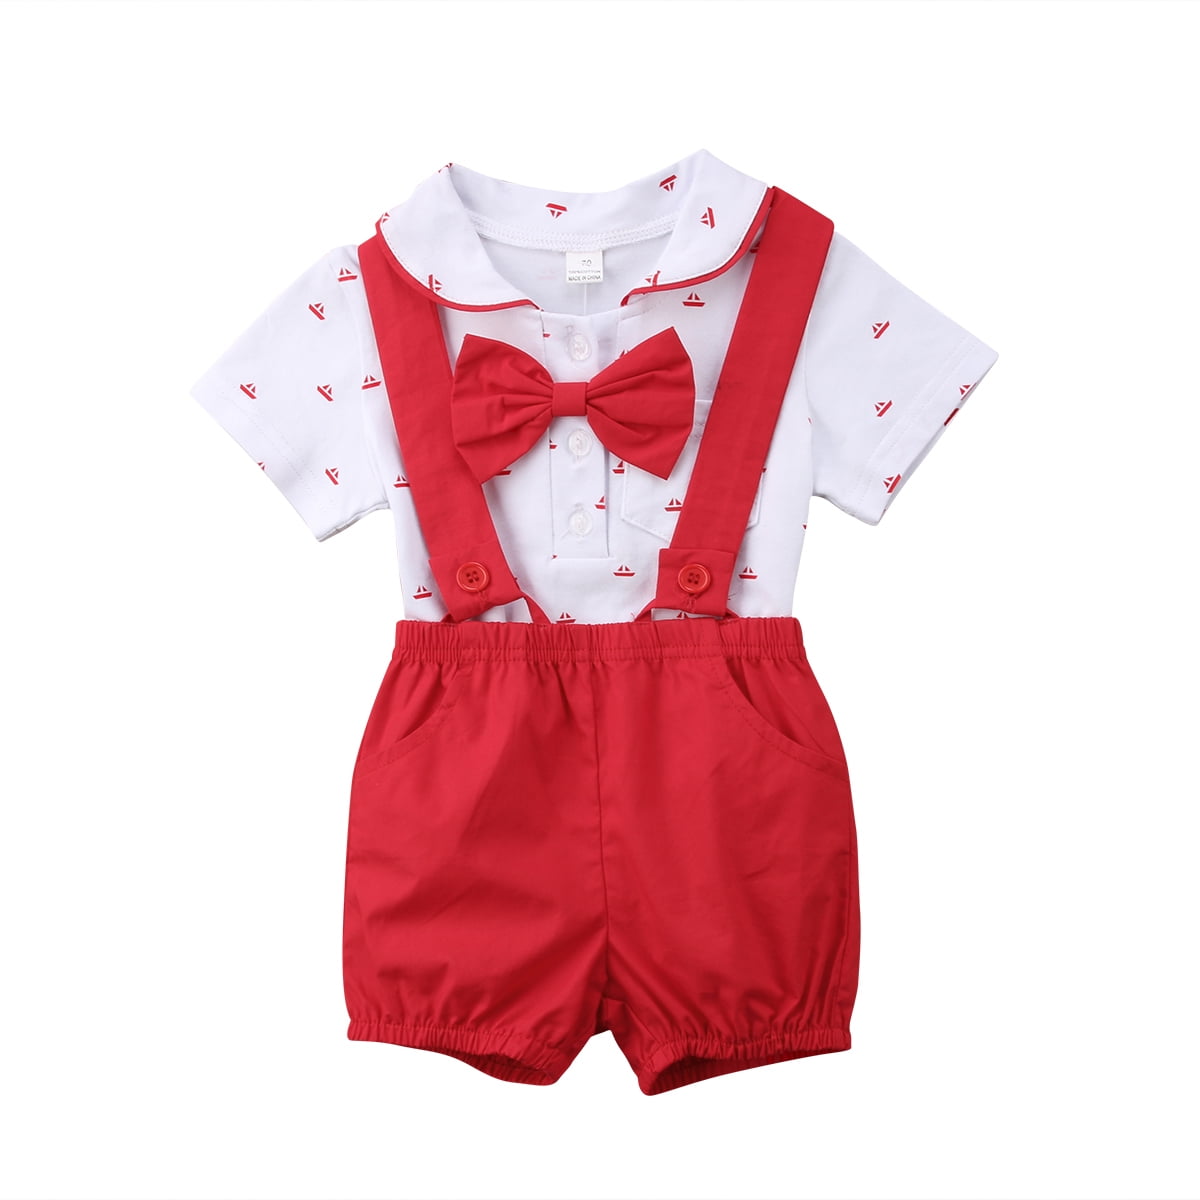 Infant Baby Boy Wedding Formal Suit Bowtie Gentleman Romper Outfit 0-24M Newborn 